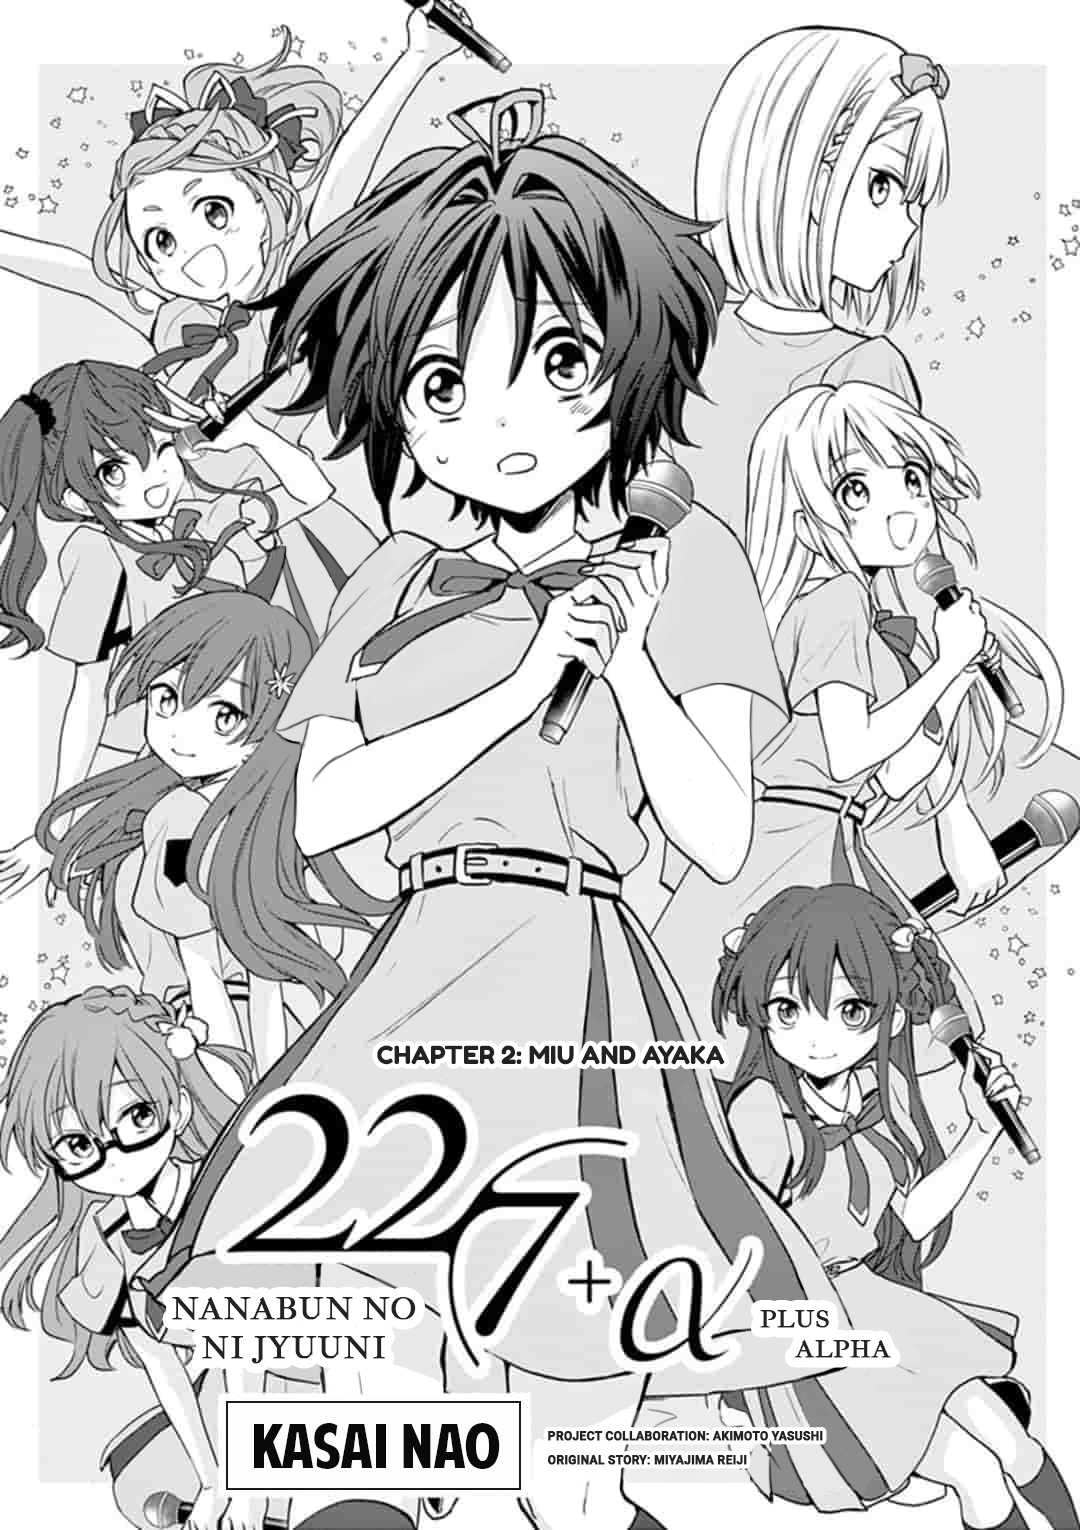 22/7 (Nanabun No Nijyuuni) +Α Chapter 2: Miu And Ayaka - Picture 1